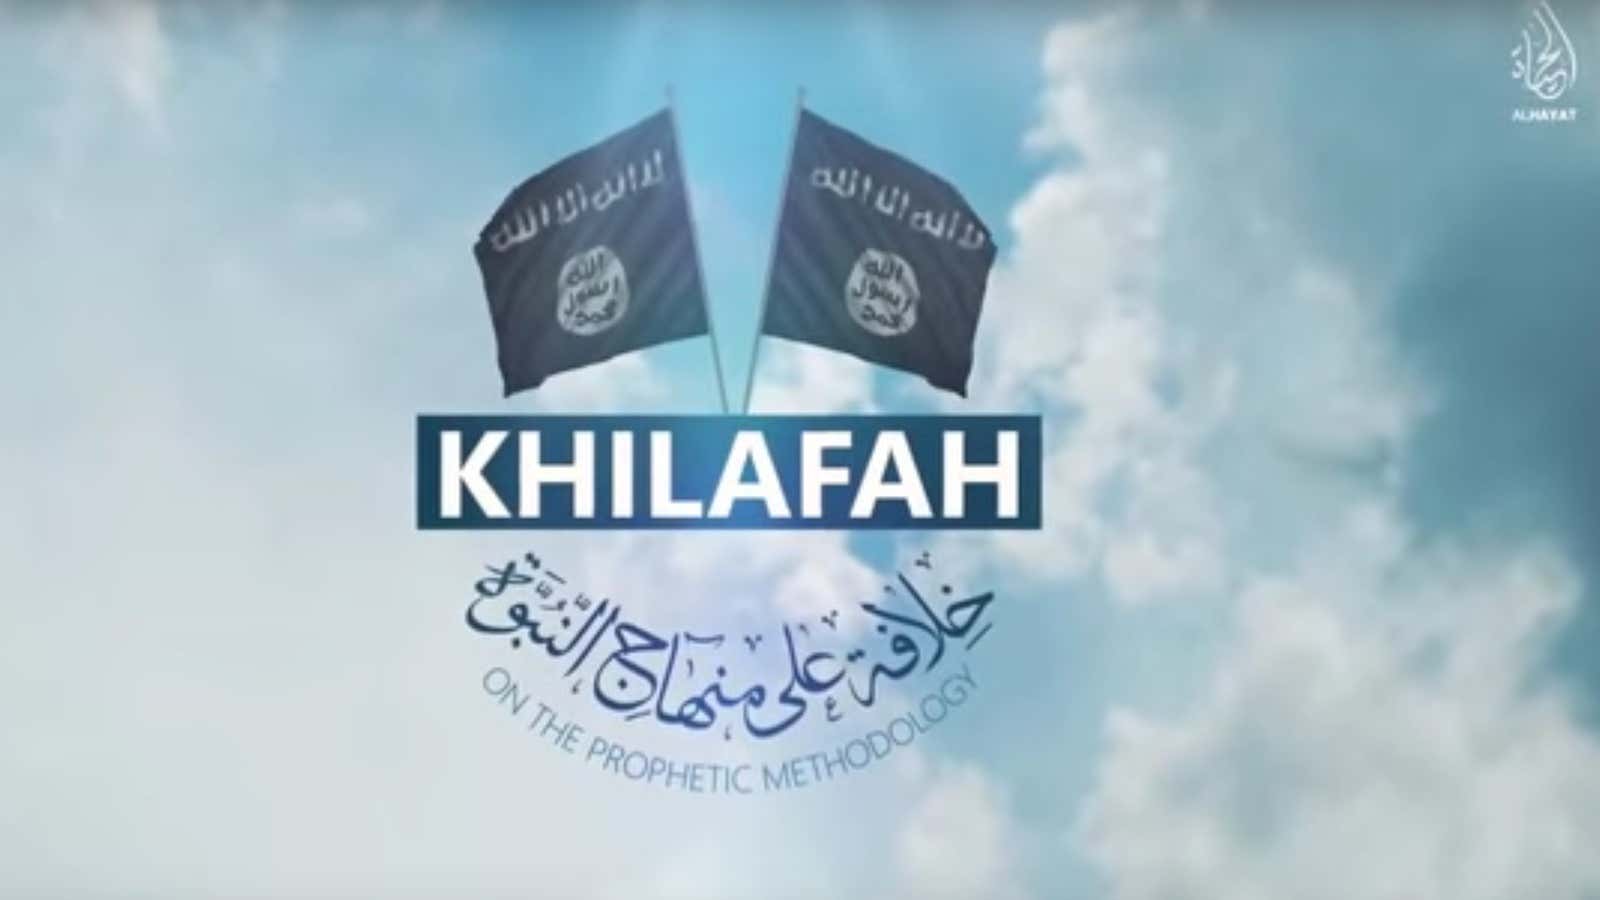 A slick new recruitment video highlight’s the terror groups marketing chops.